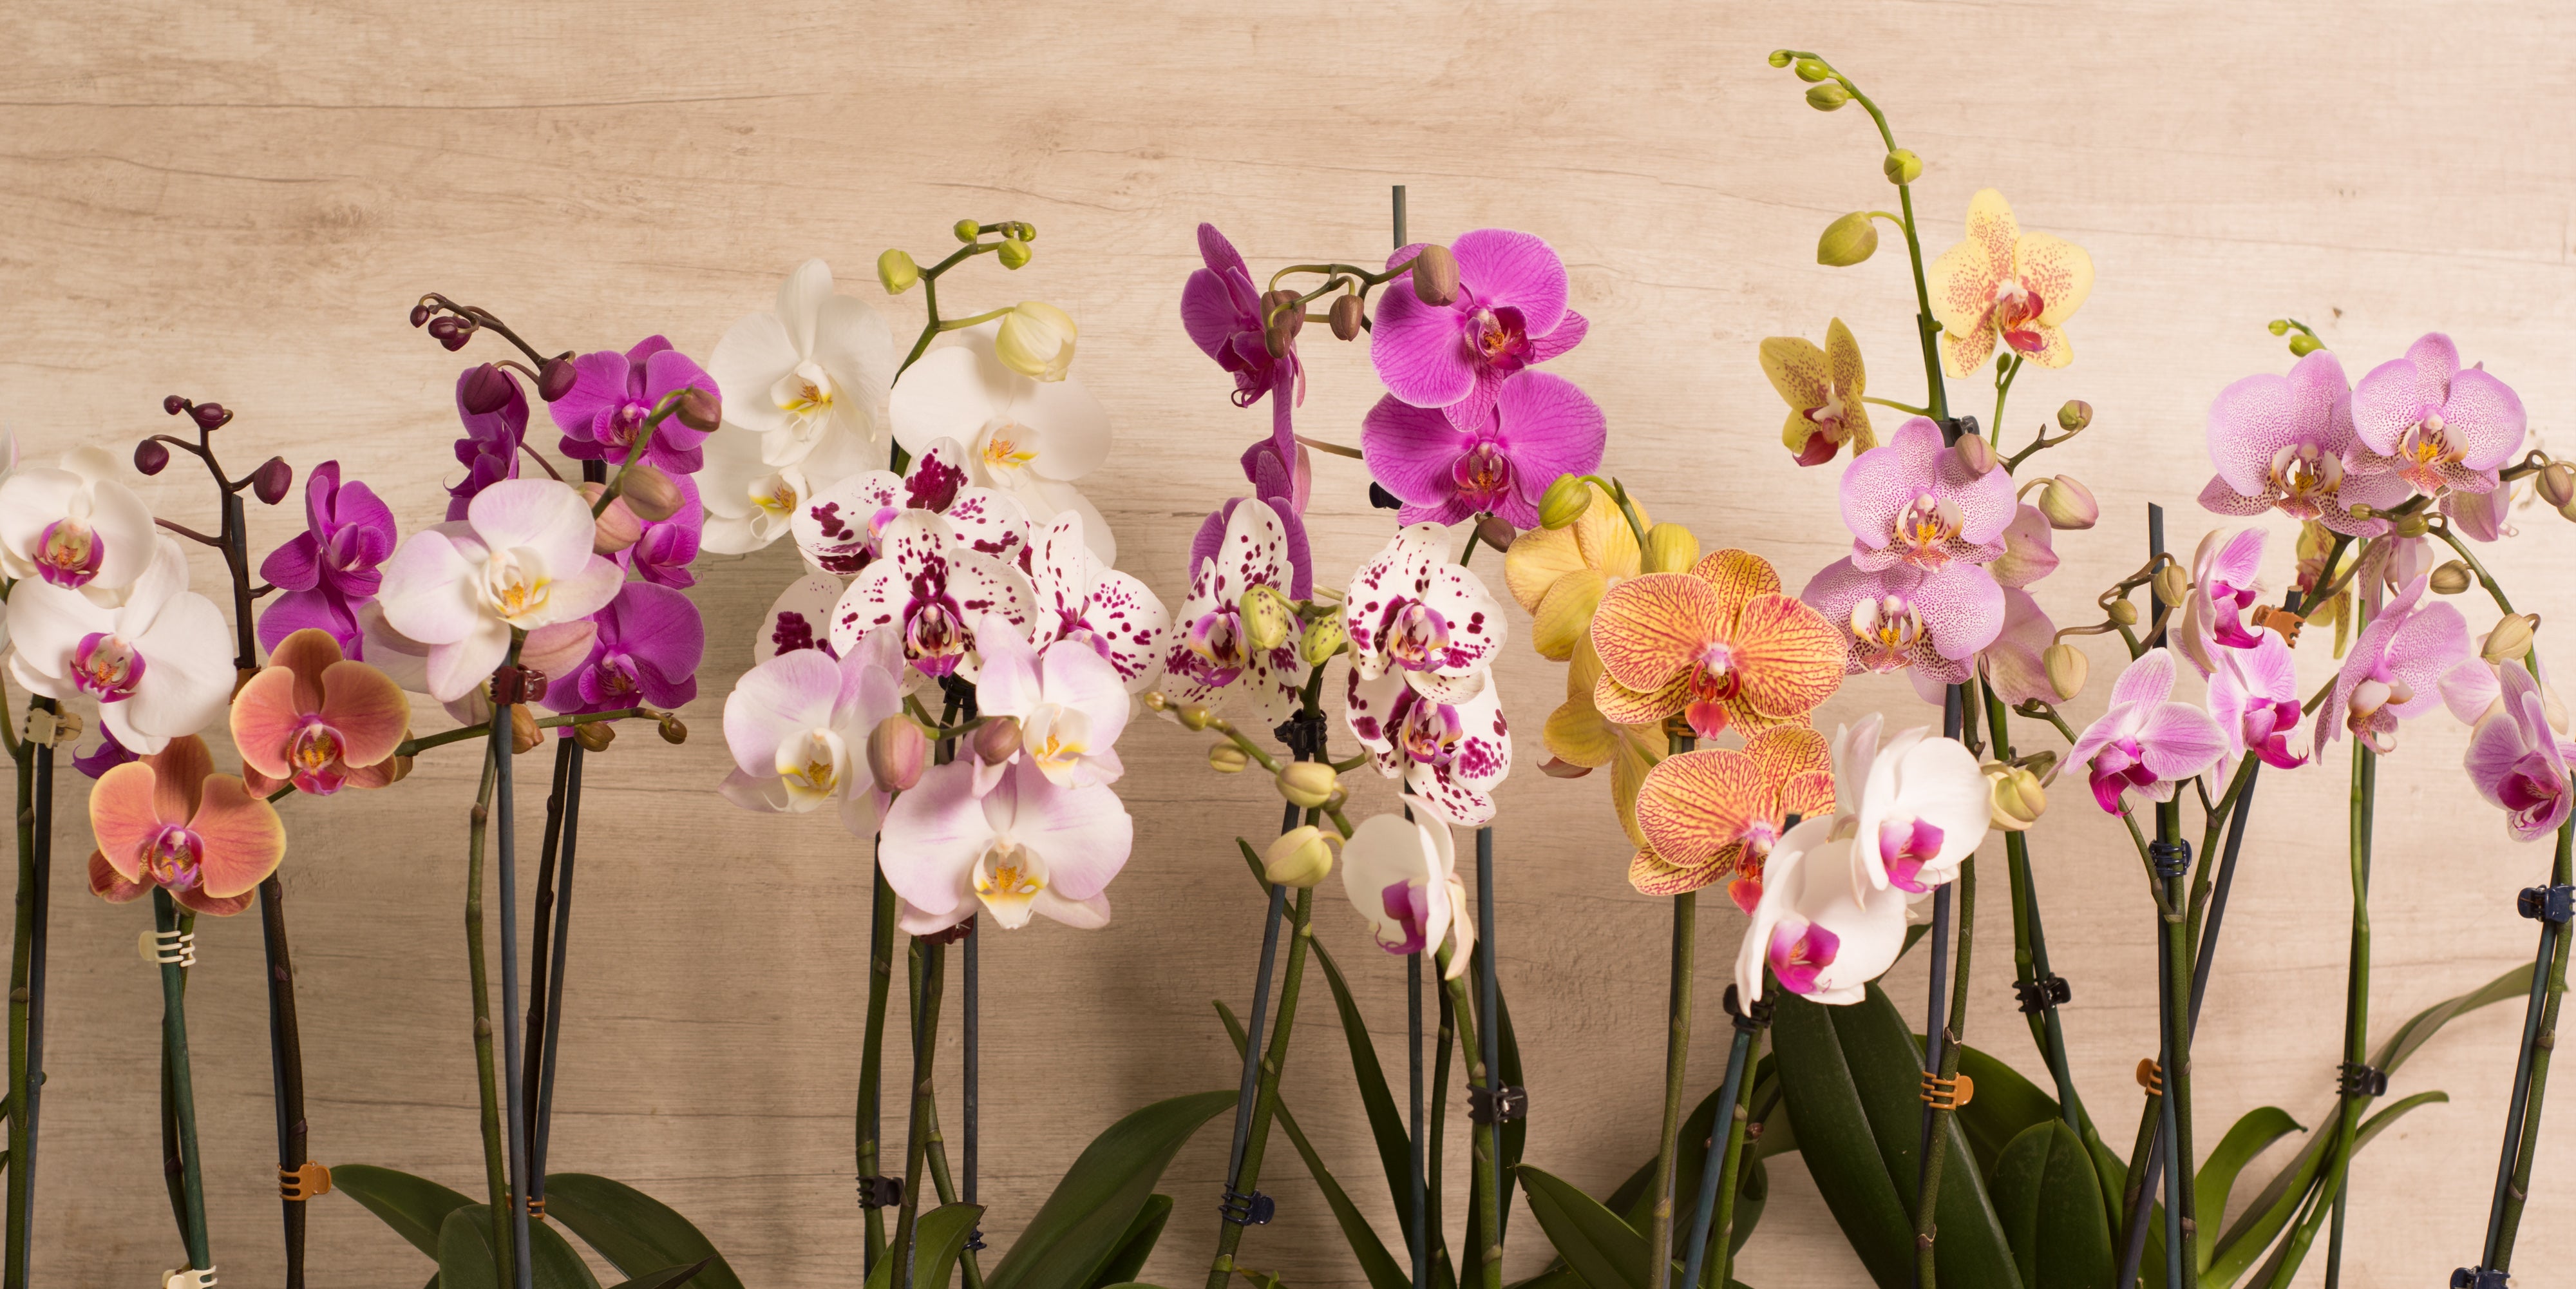 Remedios caseros para abonar orquídeas de manera natural